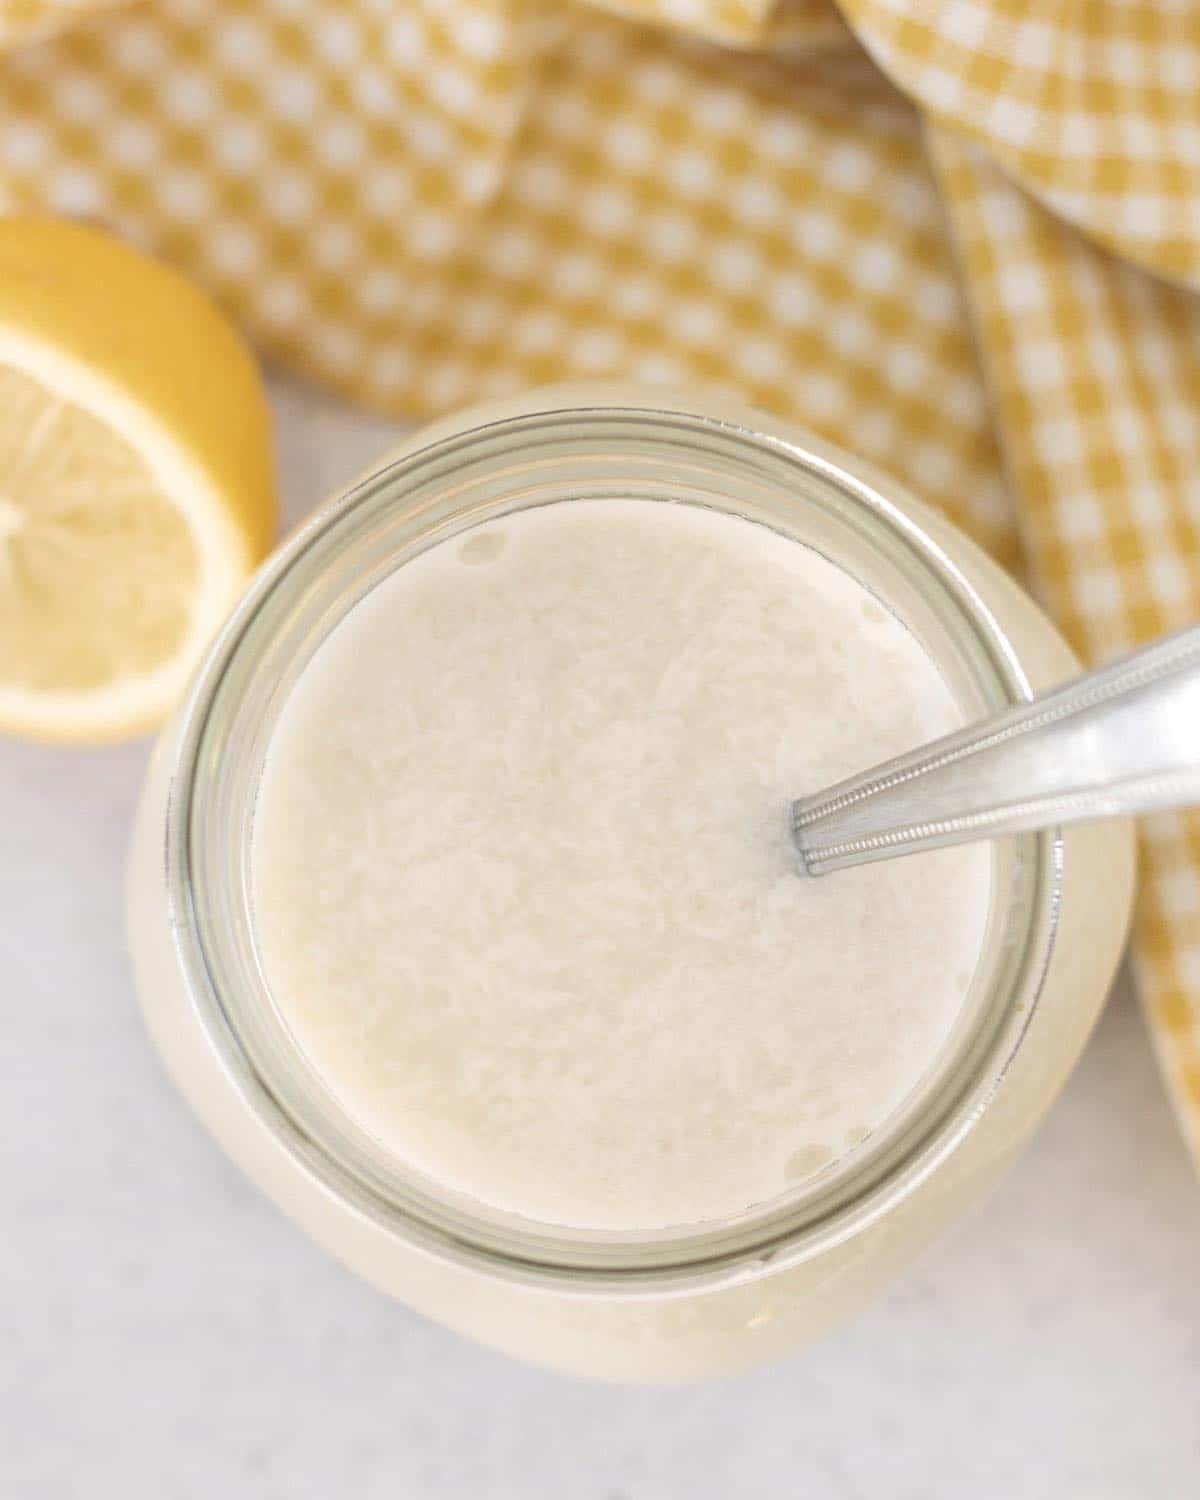 An overhead shot showing curdled vegan buttermilk in a jar.